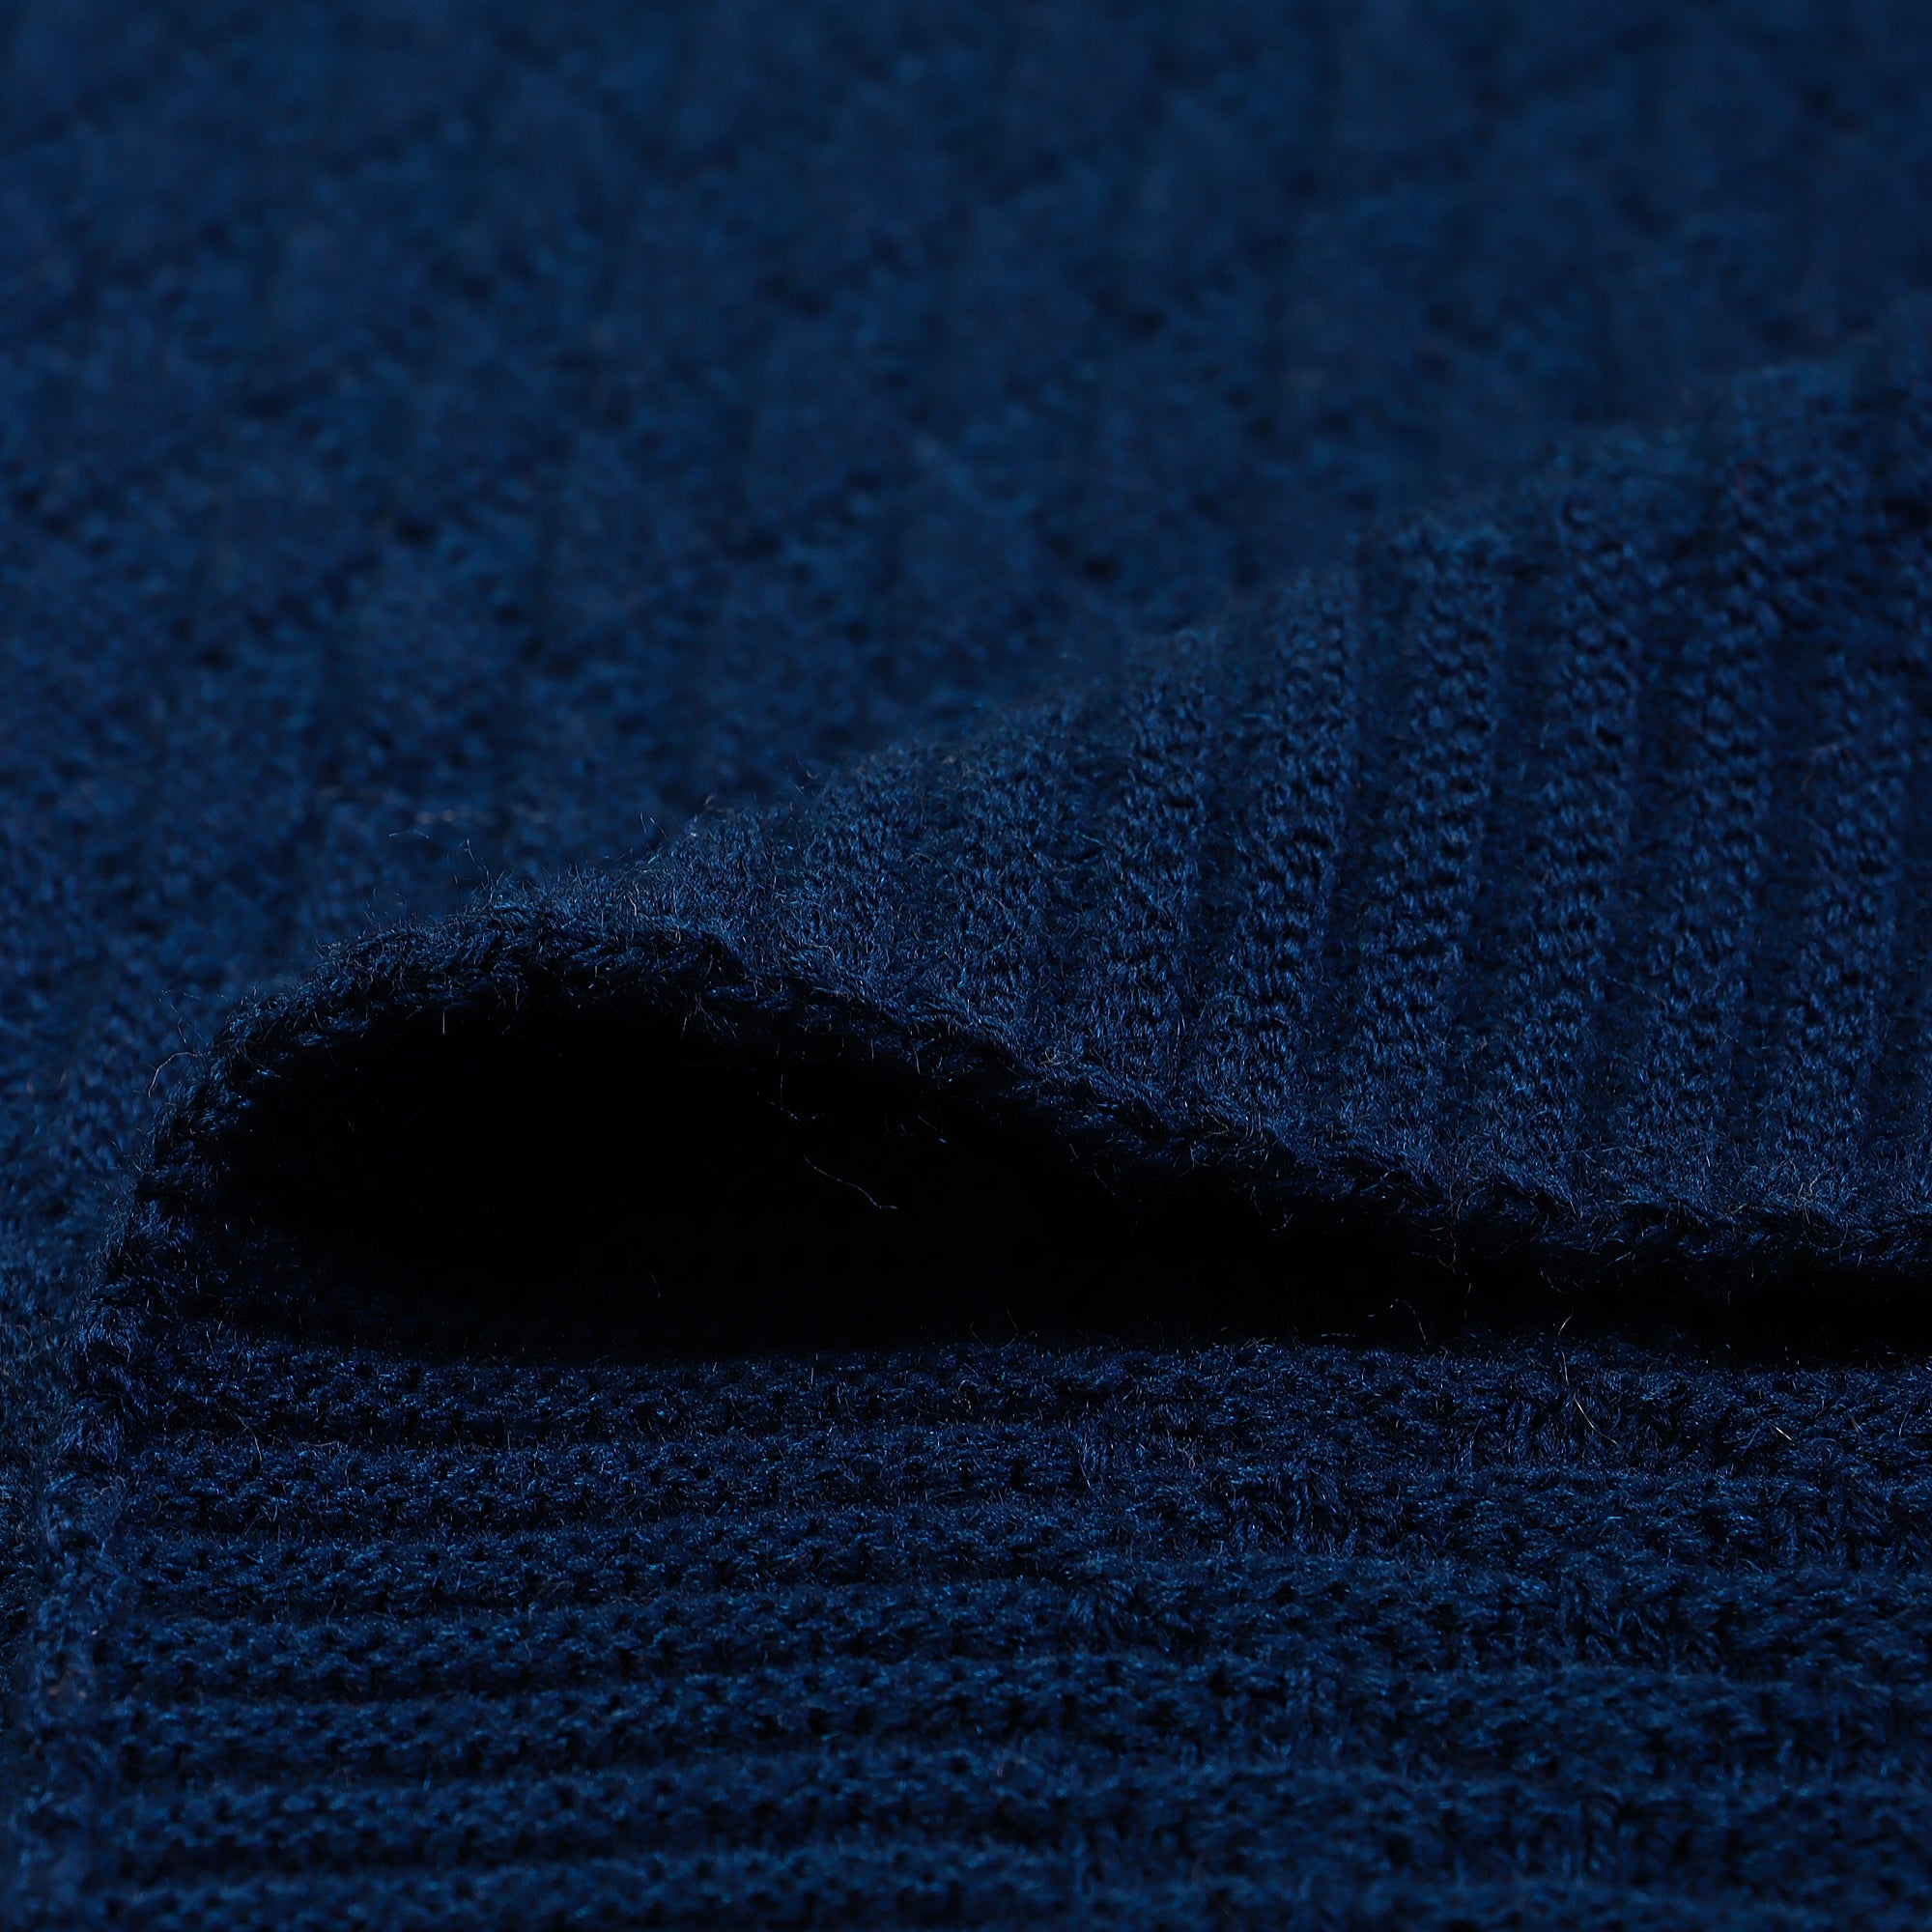 Navy Blue Reversible Soft Cotton Tufted Sofa Blanket Throw